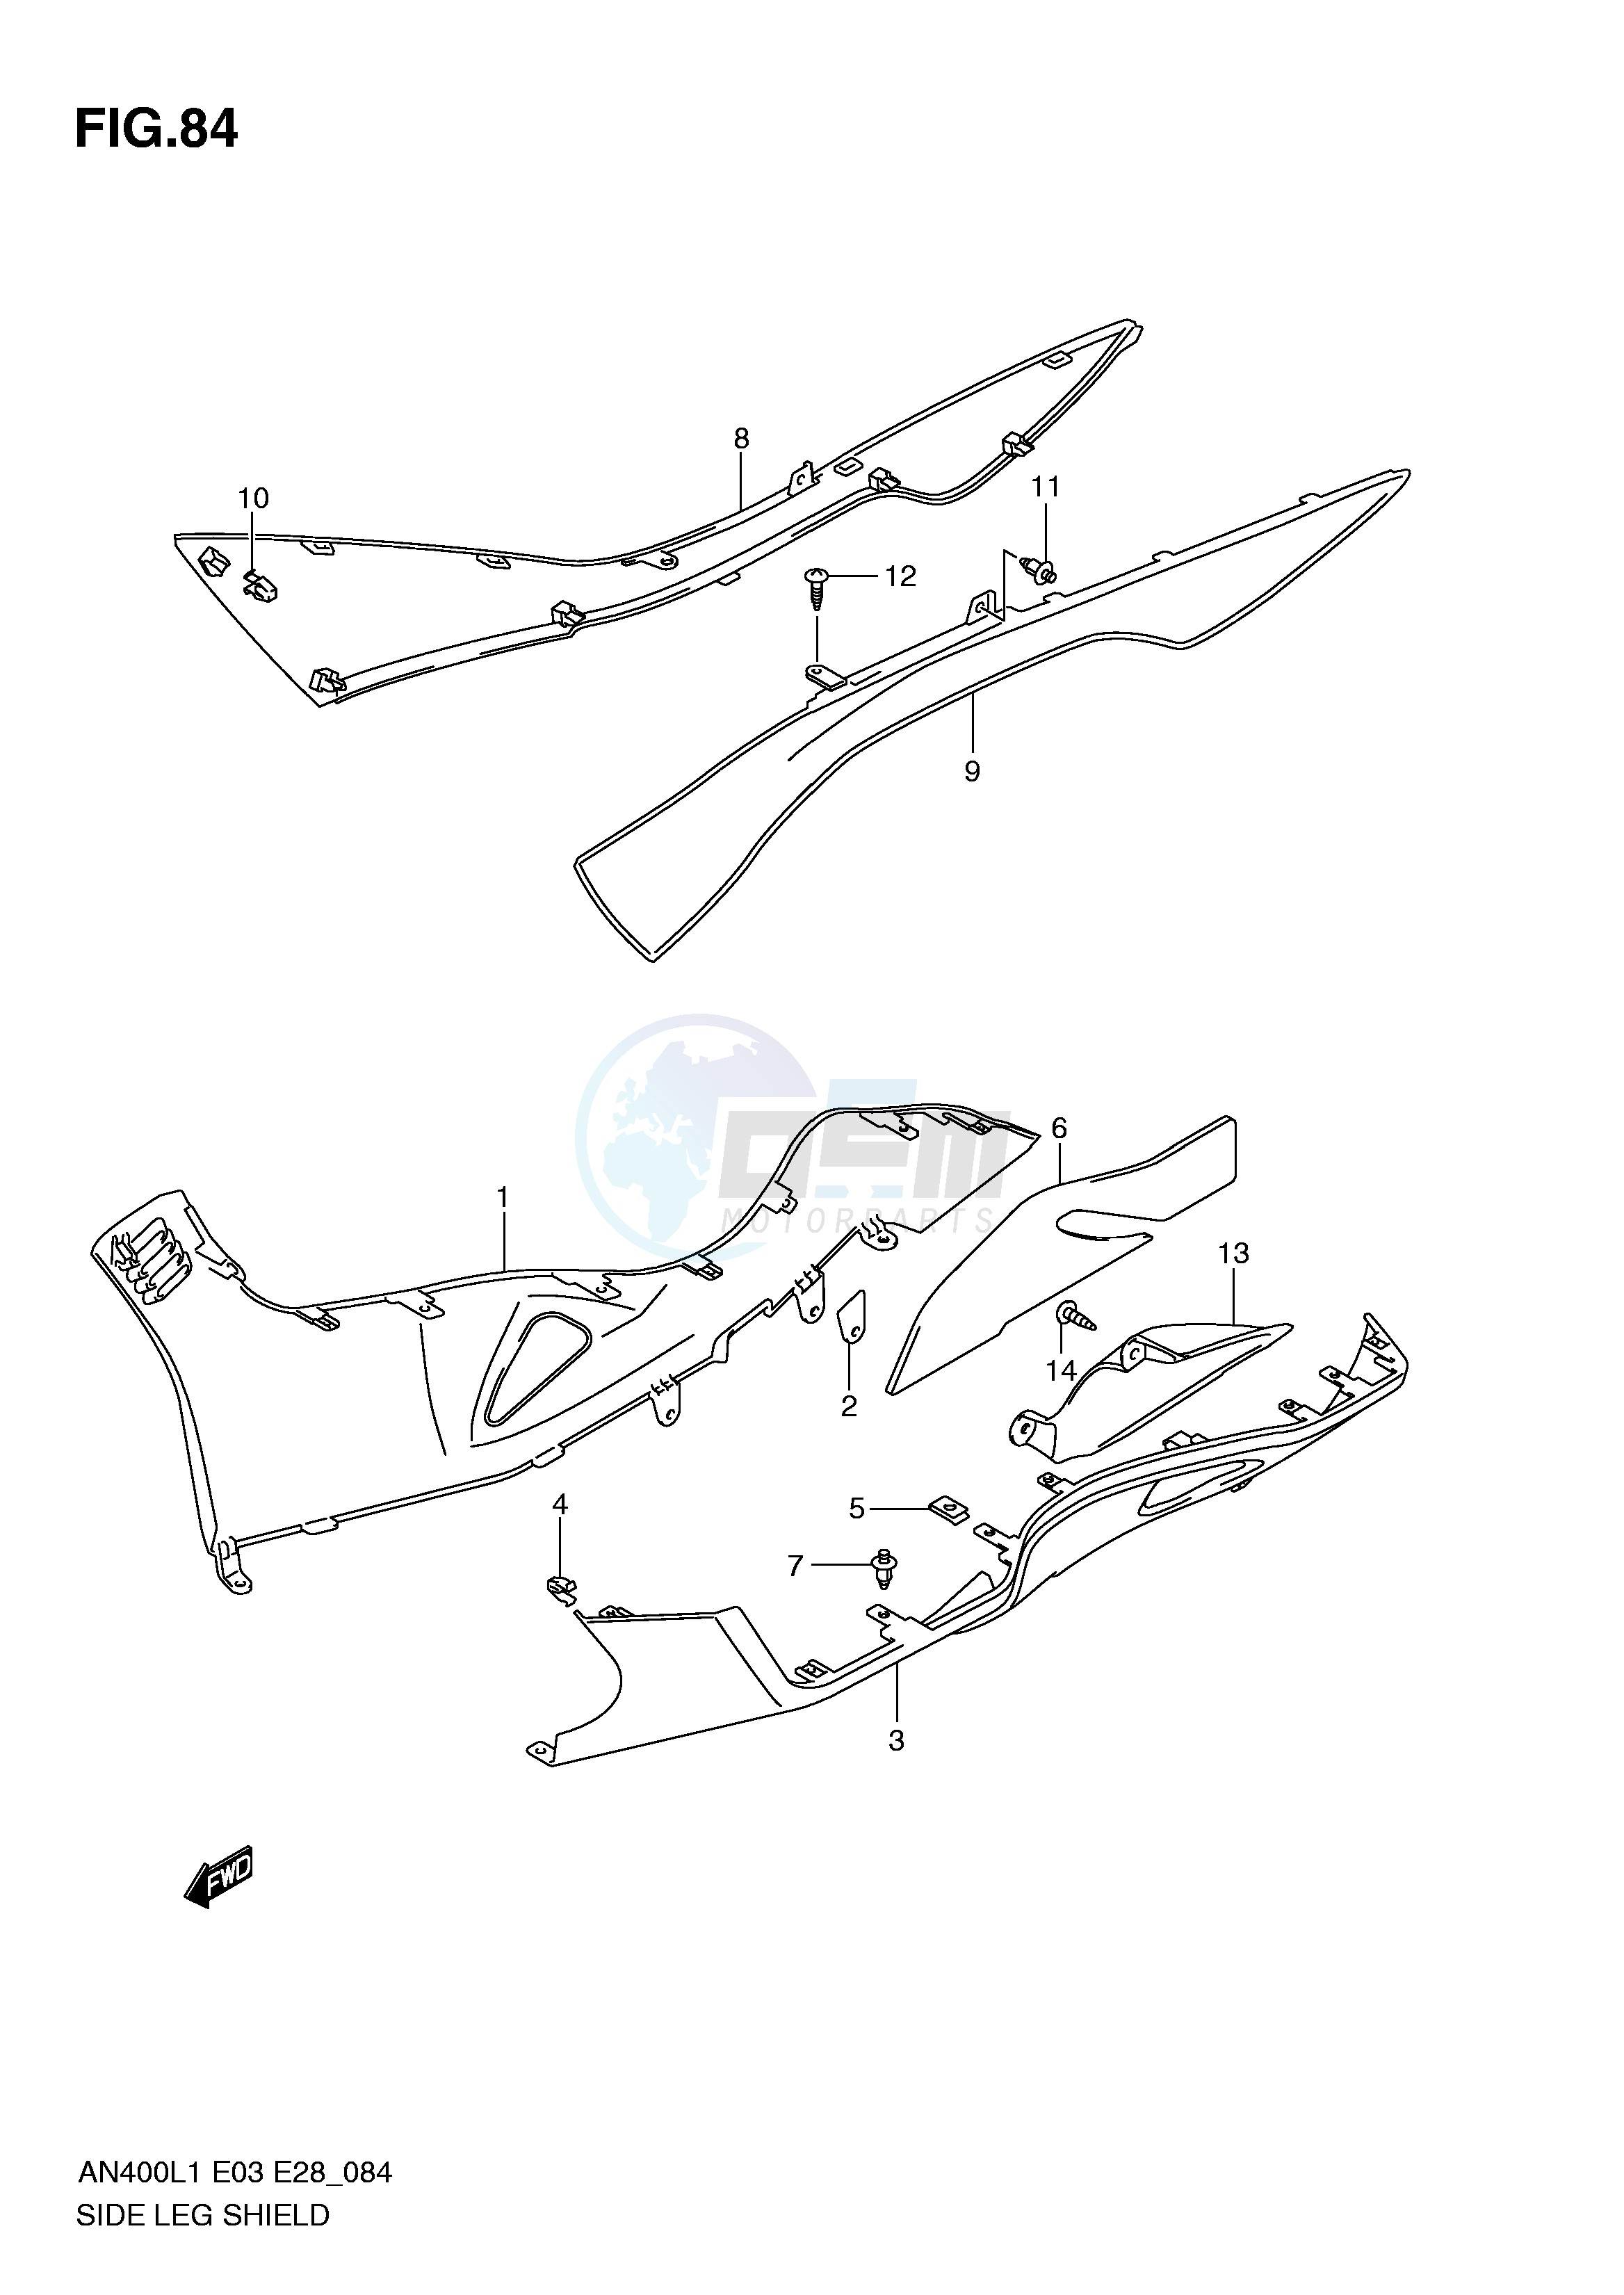 SIDE LEG SHIELD (AN400AL1 E33) blueprint